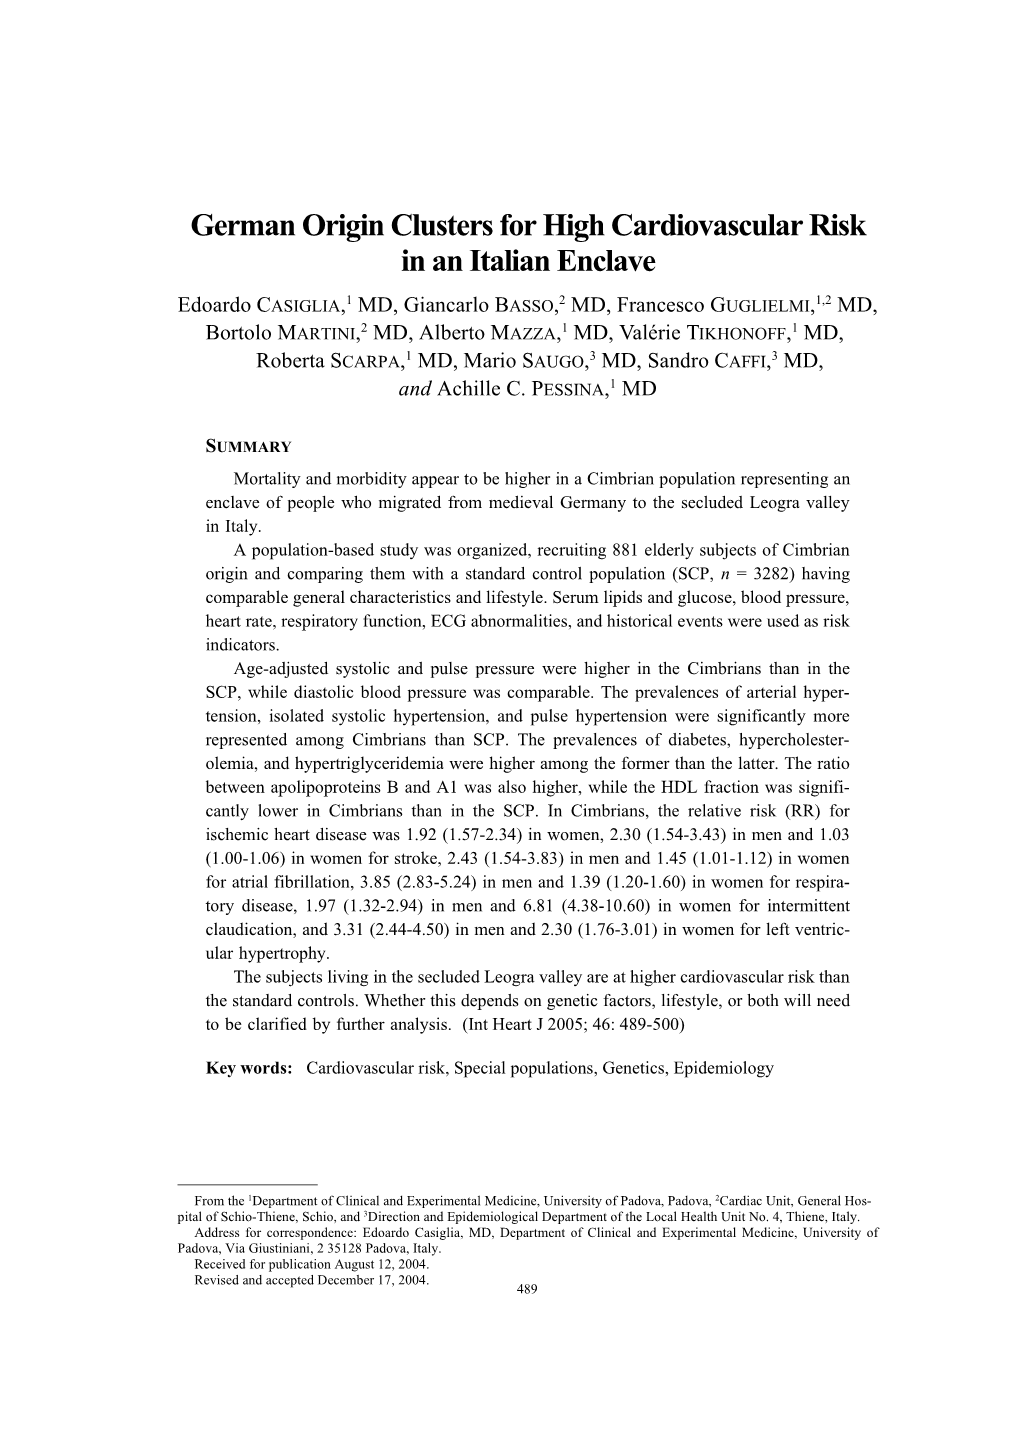 German Origin Clusters for High Cardiovascular Risk in an Italian Enclave